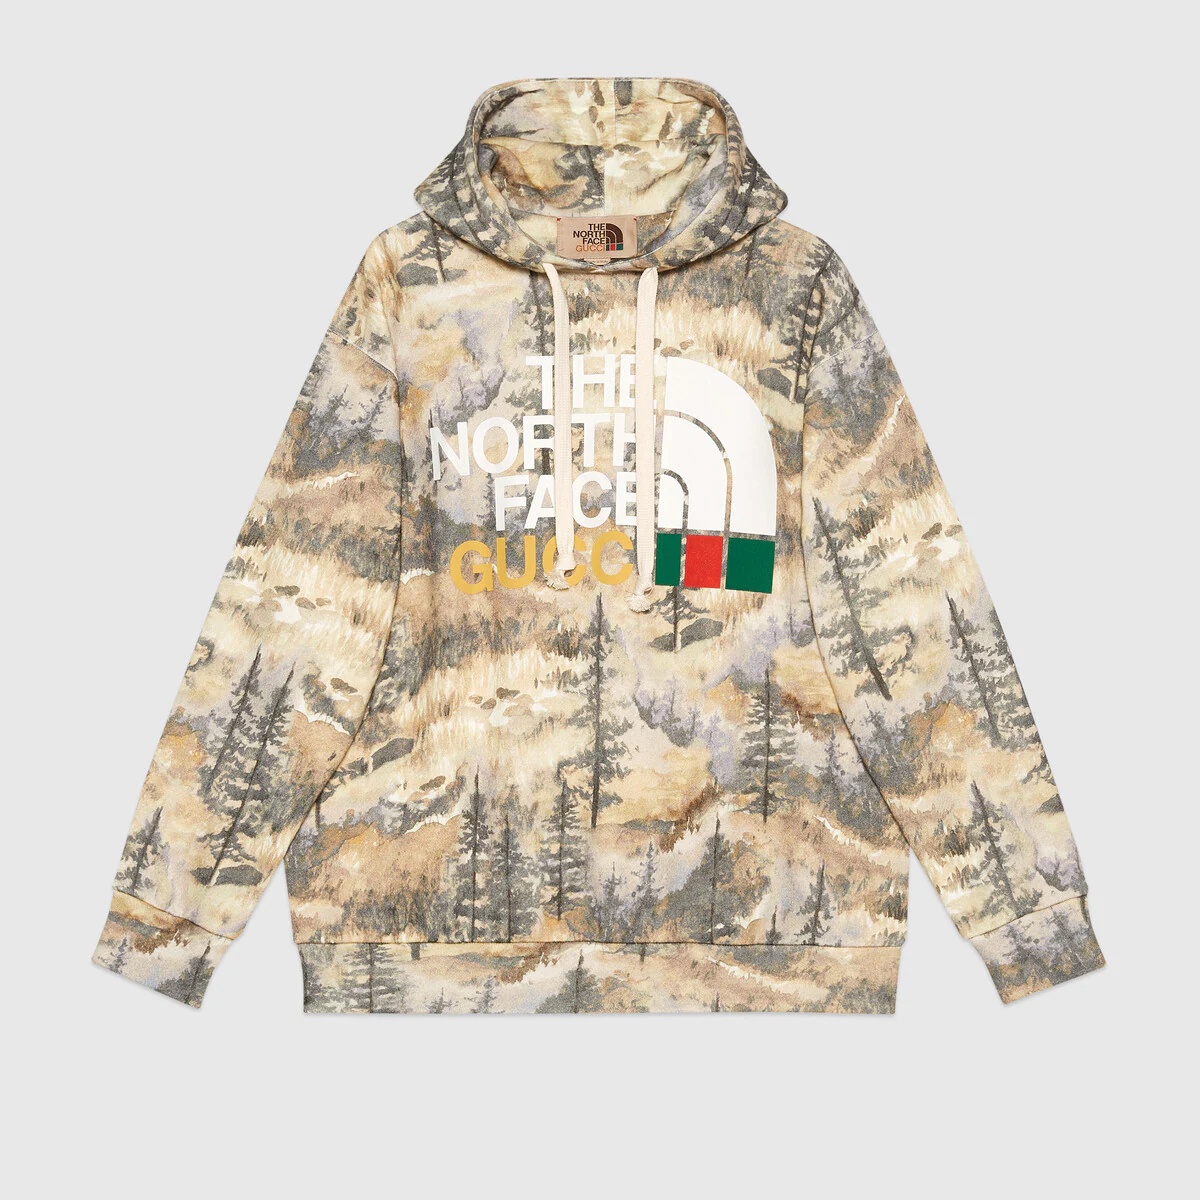 The North Face x Gucci sweatshirt - 1